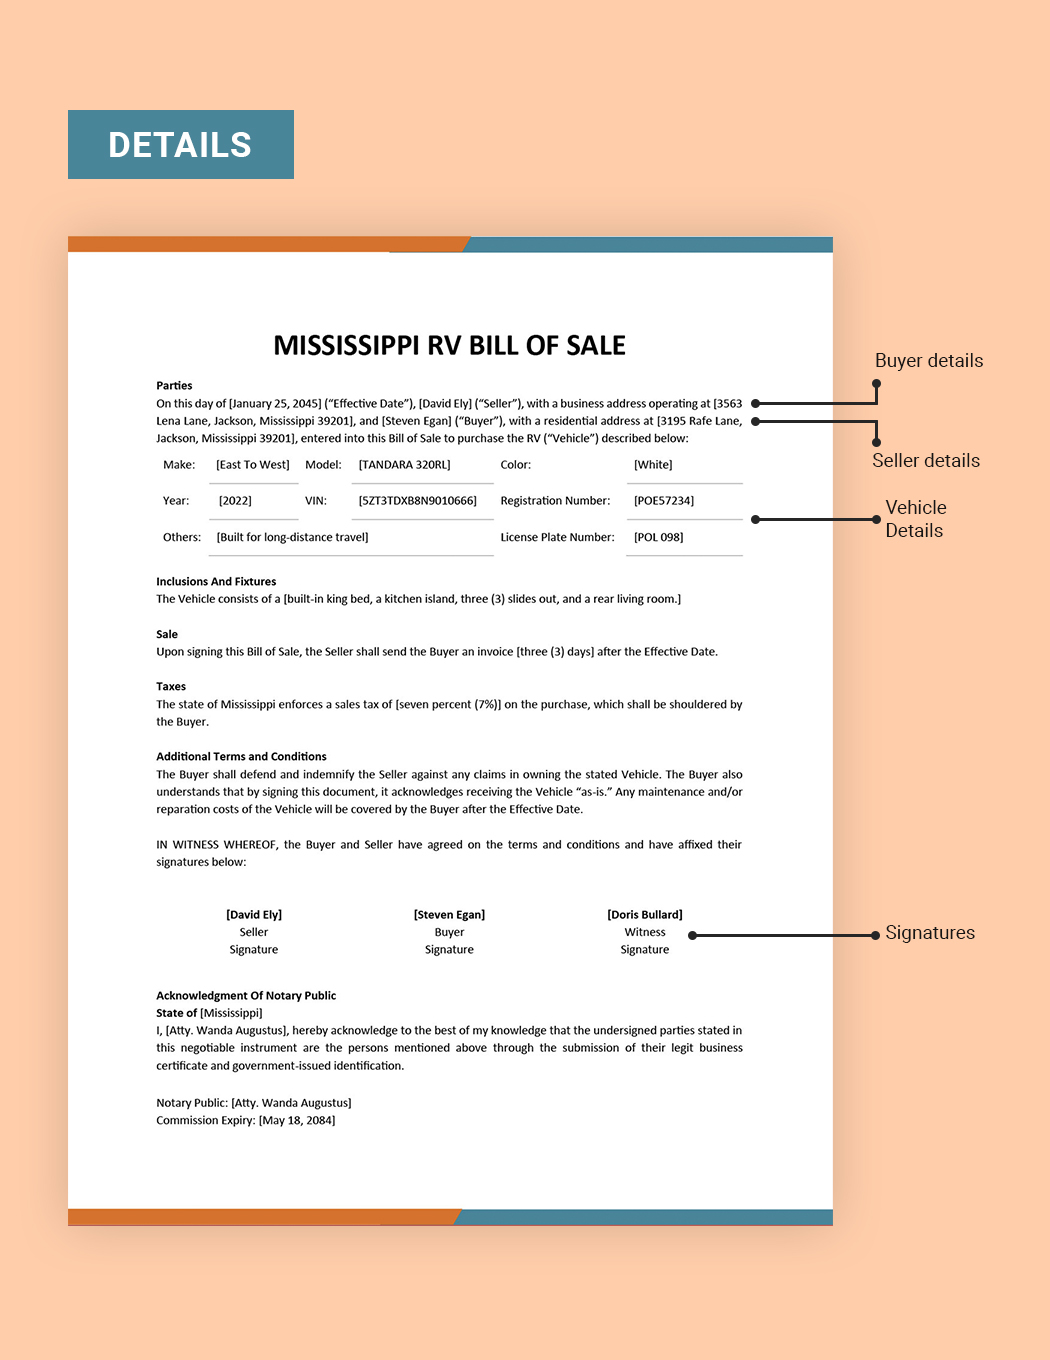 Mississippi RV Bill of Sale Template